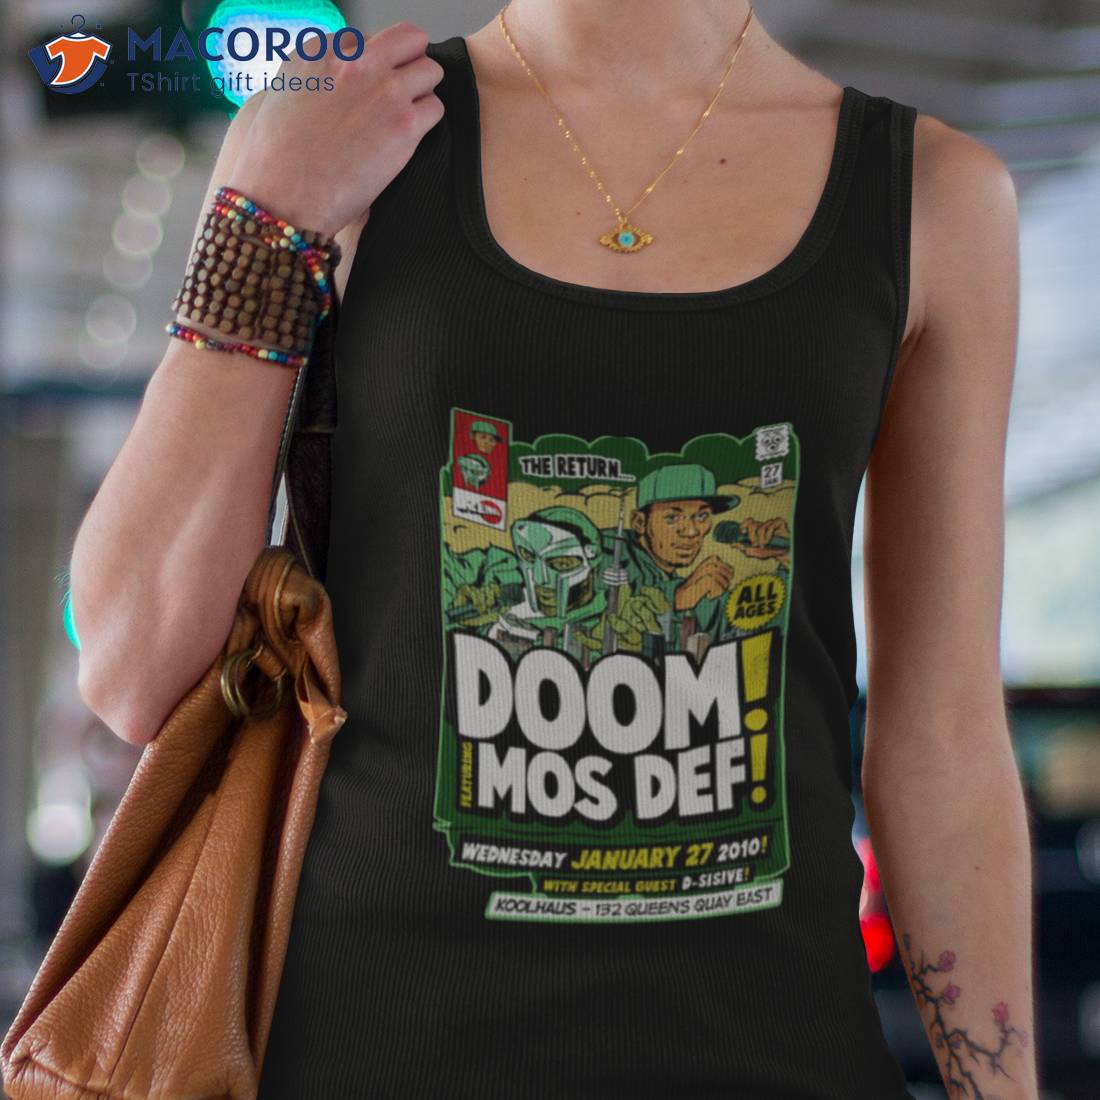 The Mos Def Mf Doom Rapper shirt - Limotees